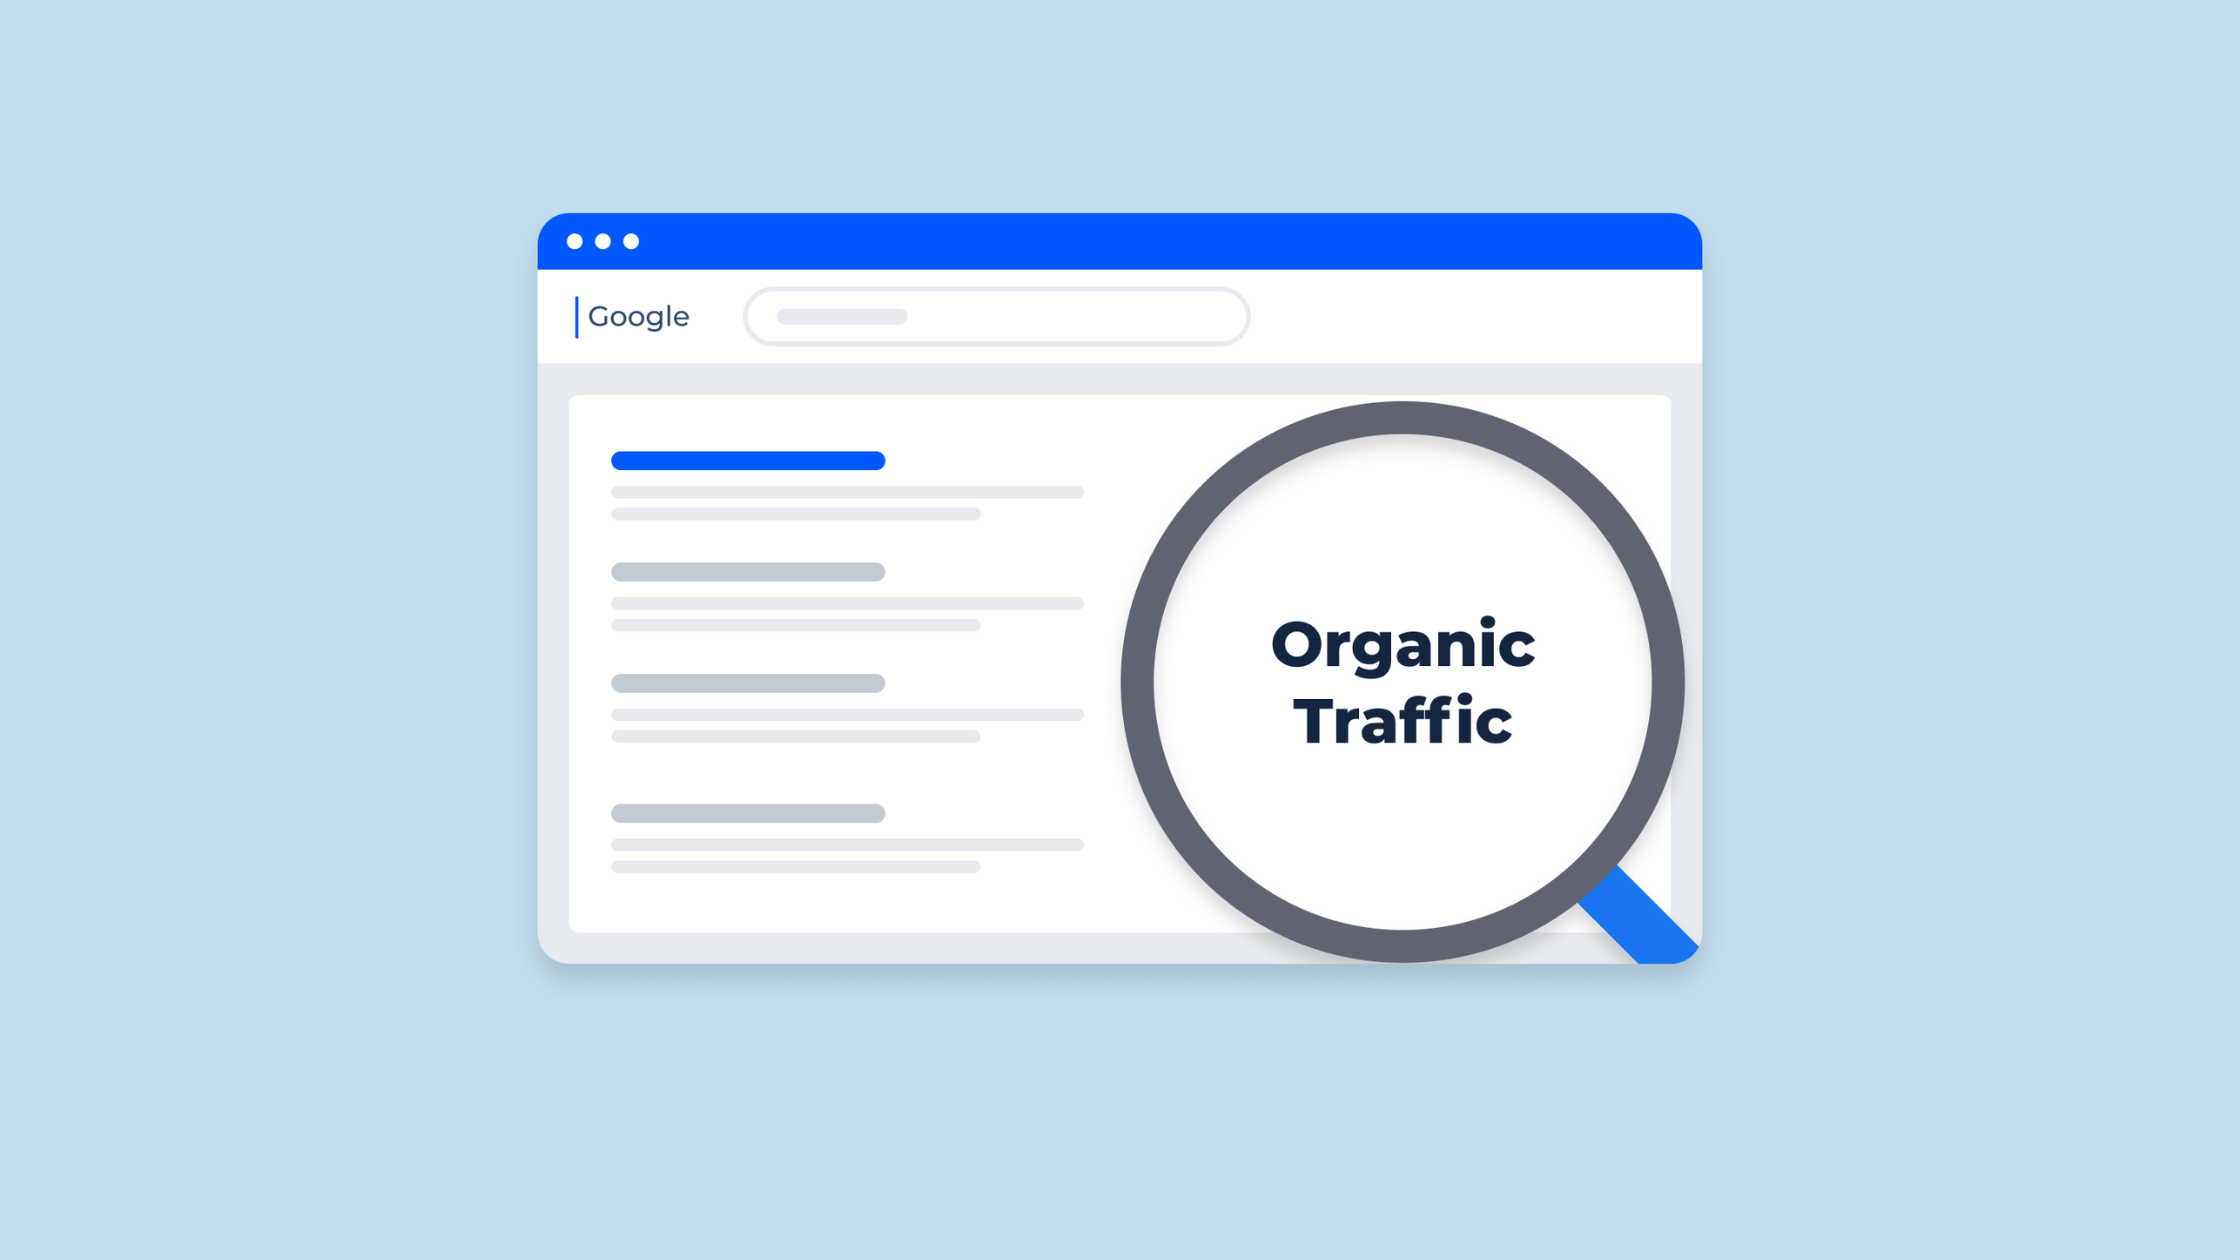 What Is Organic Traffic